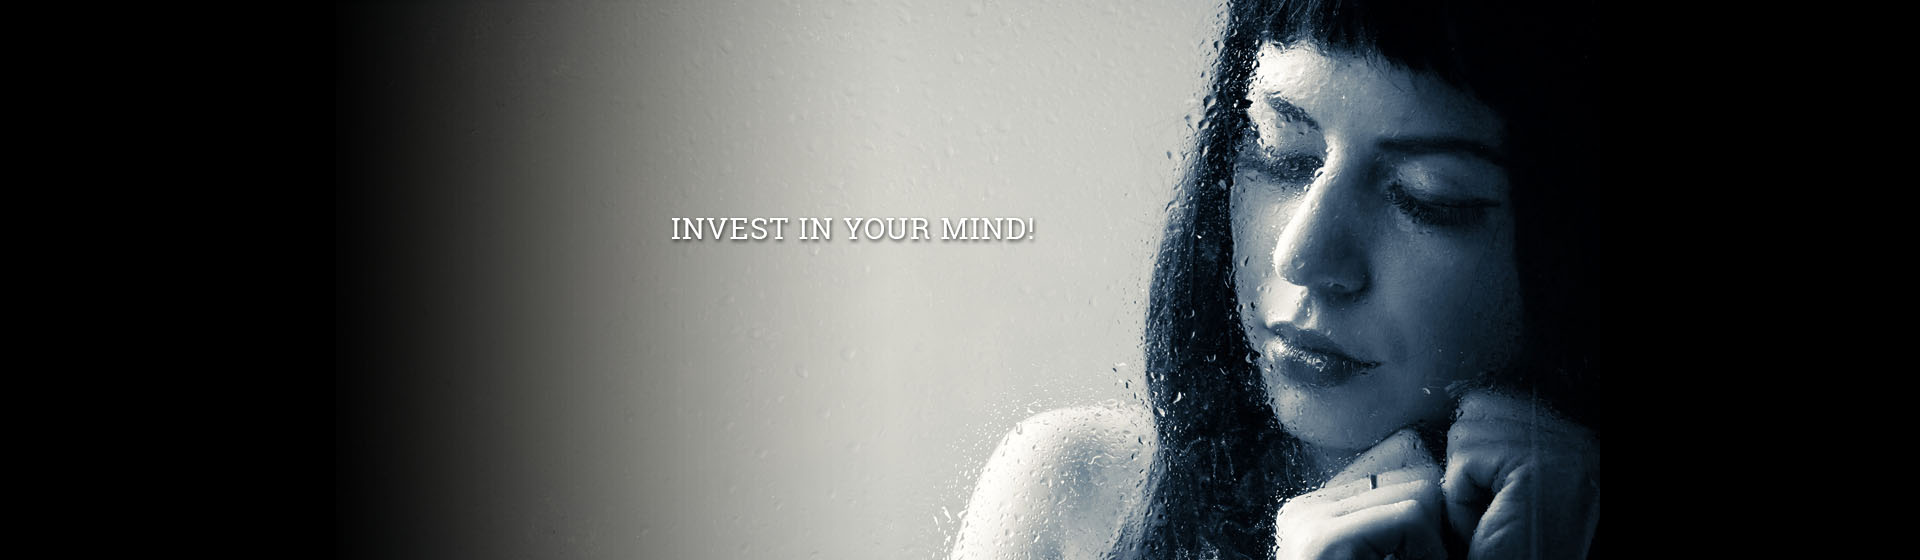 invest-mind1